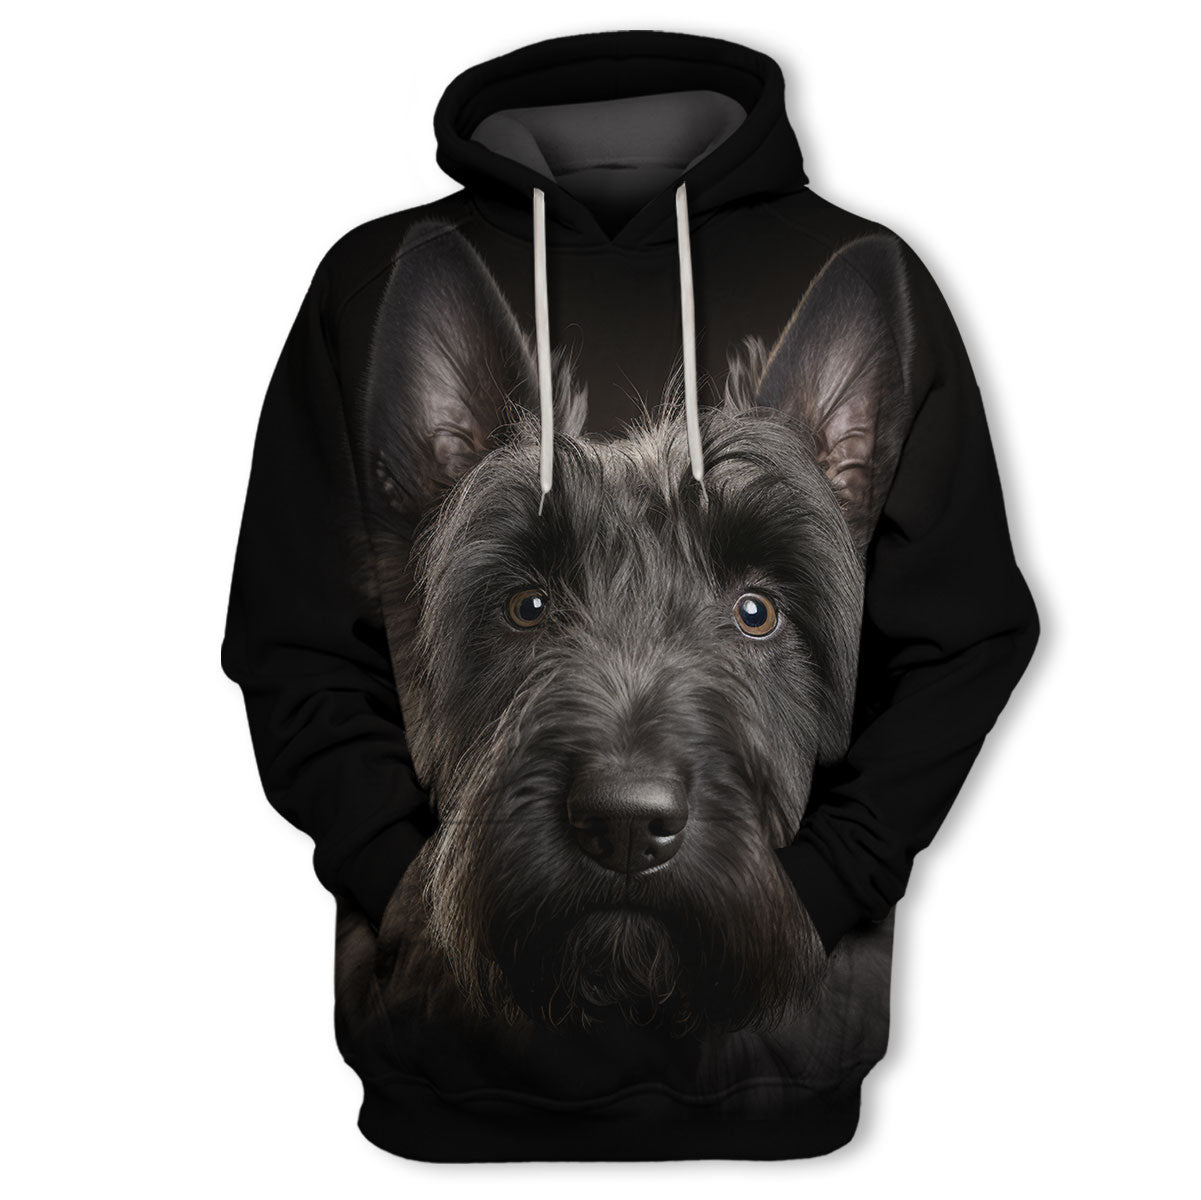 Scottish Terrier - Unisex 3D Graphic Hoodie